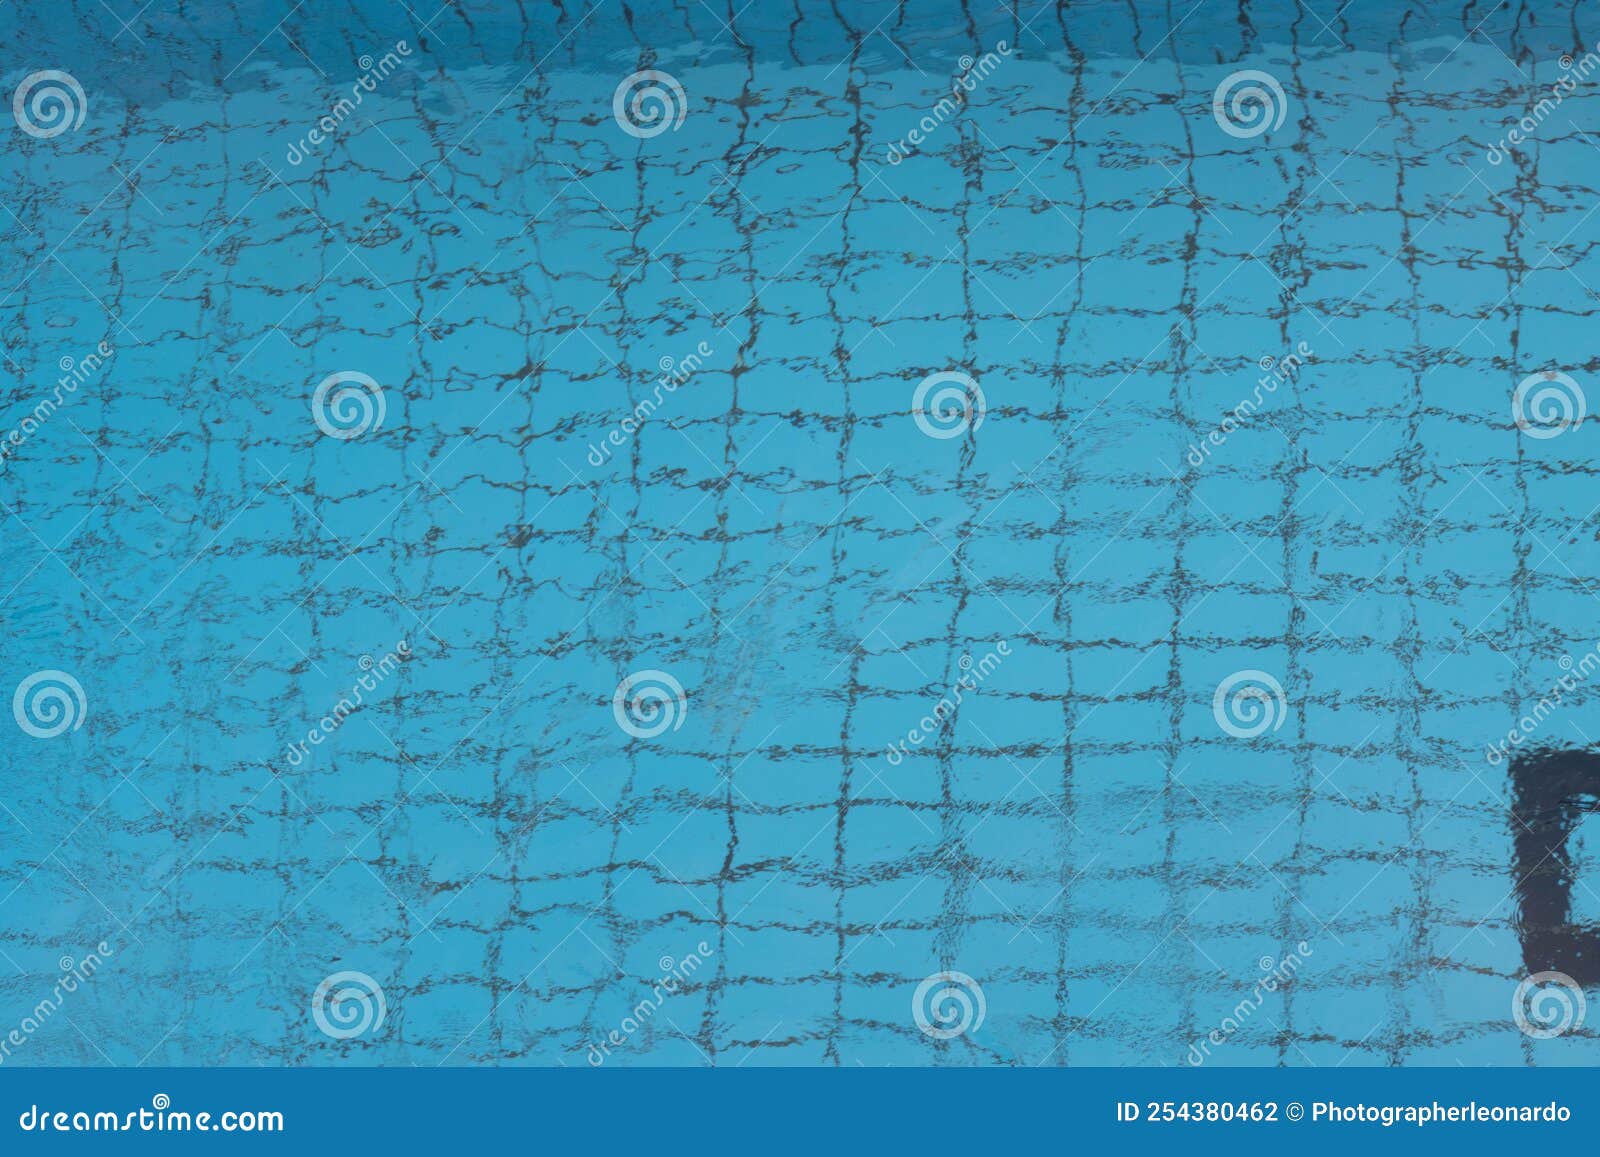 aerial or zenital view of swimming pool